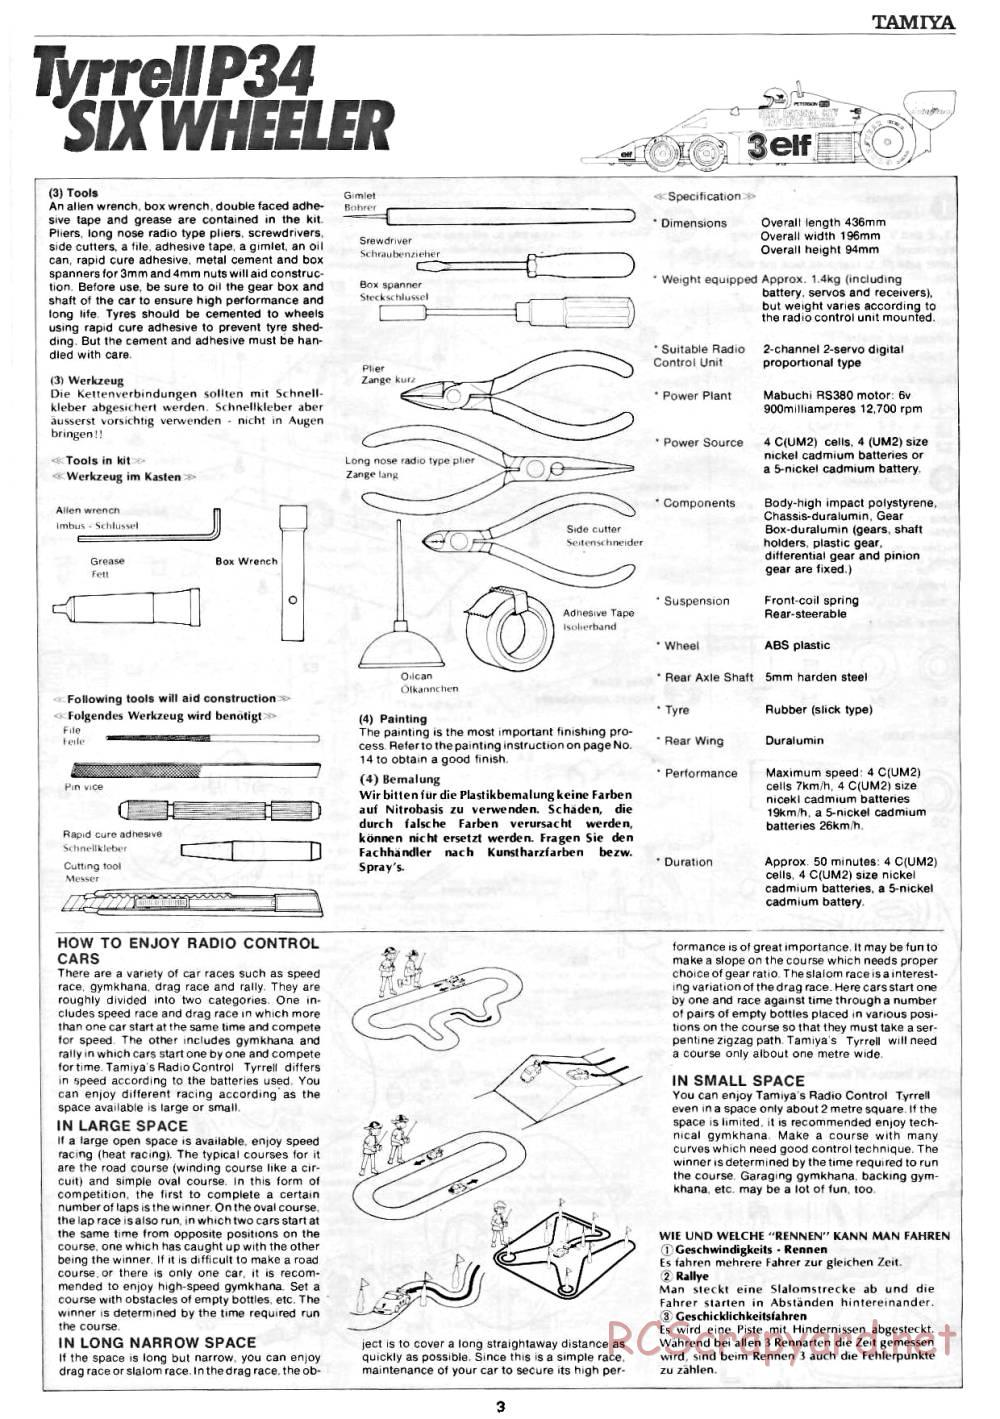 Tamiya - Tyrrell P34 Six Wheeler - 58003 - Manual - Page 3